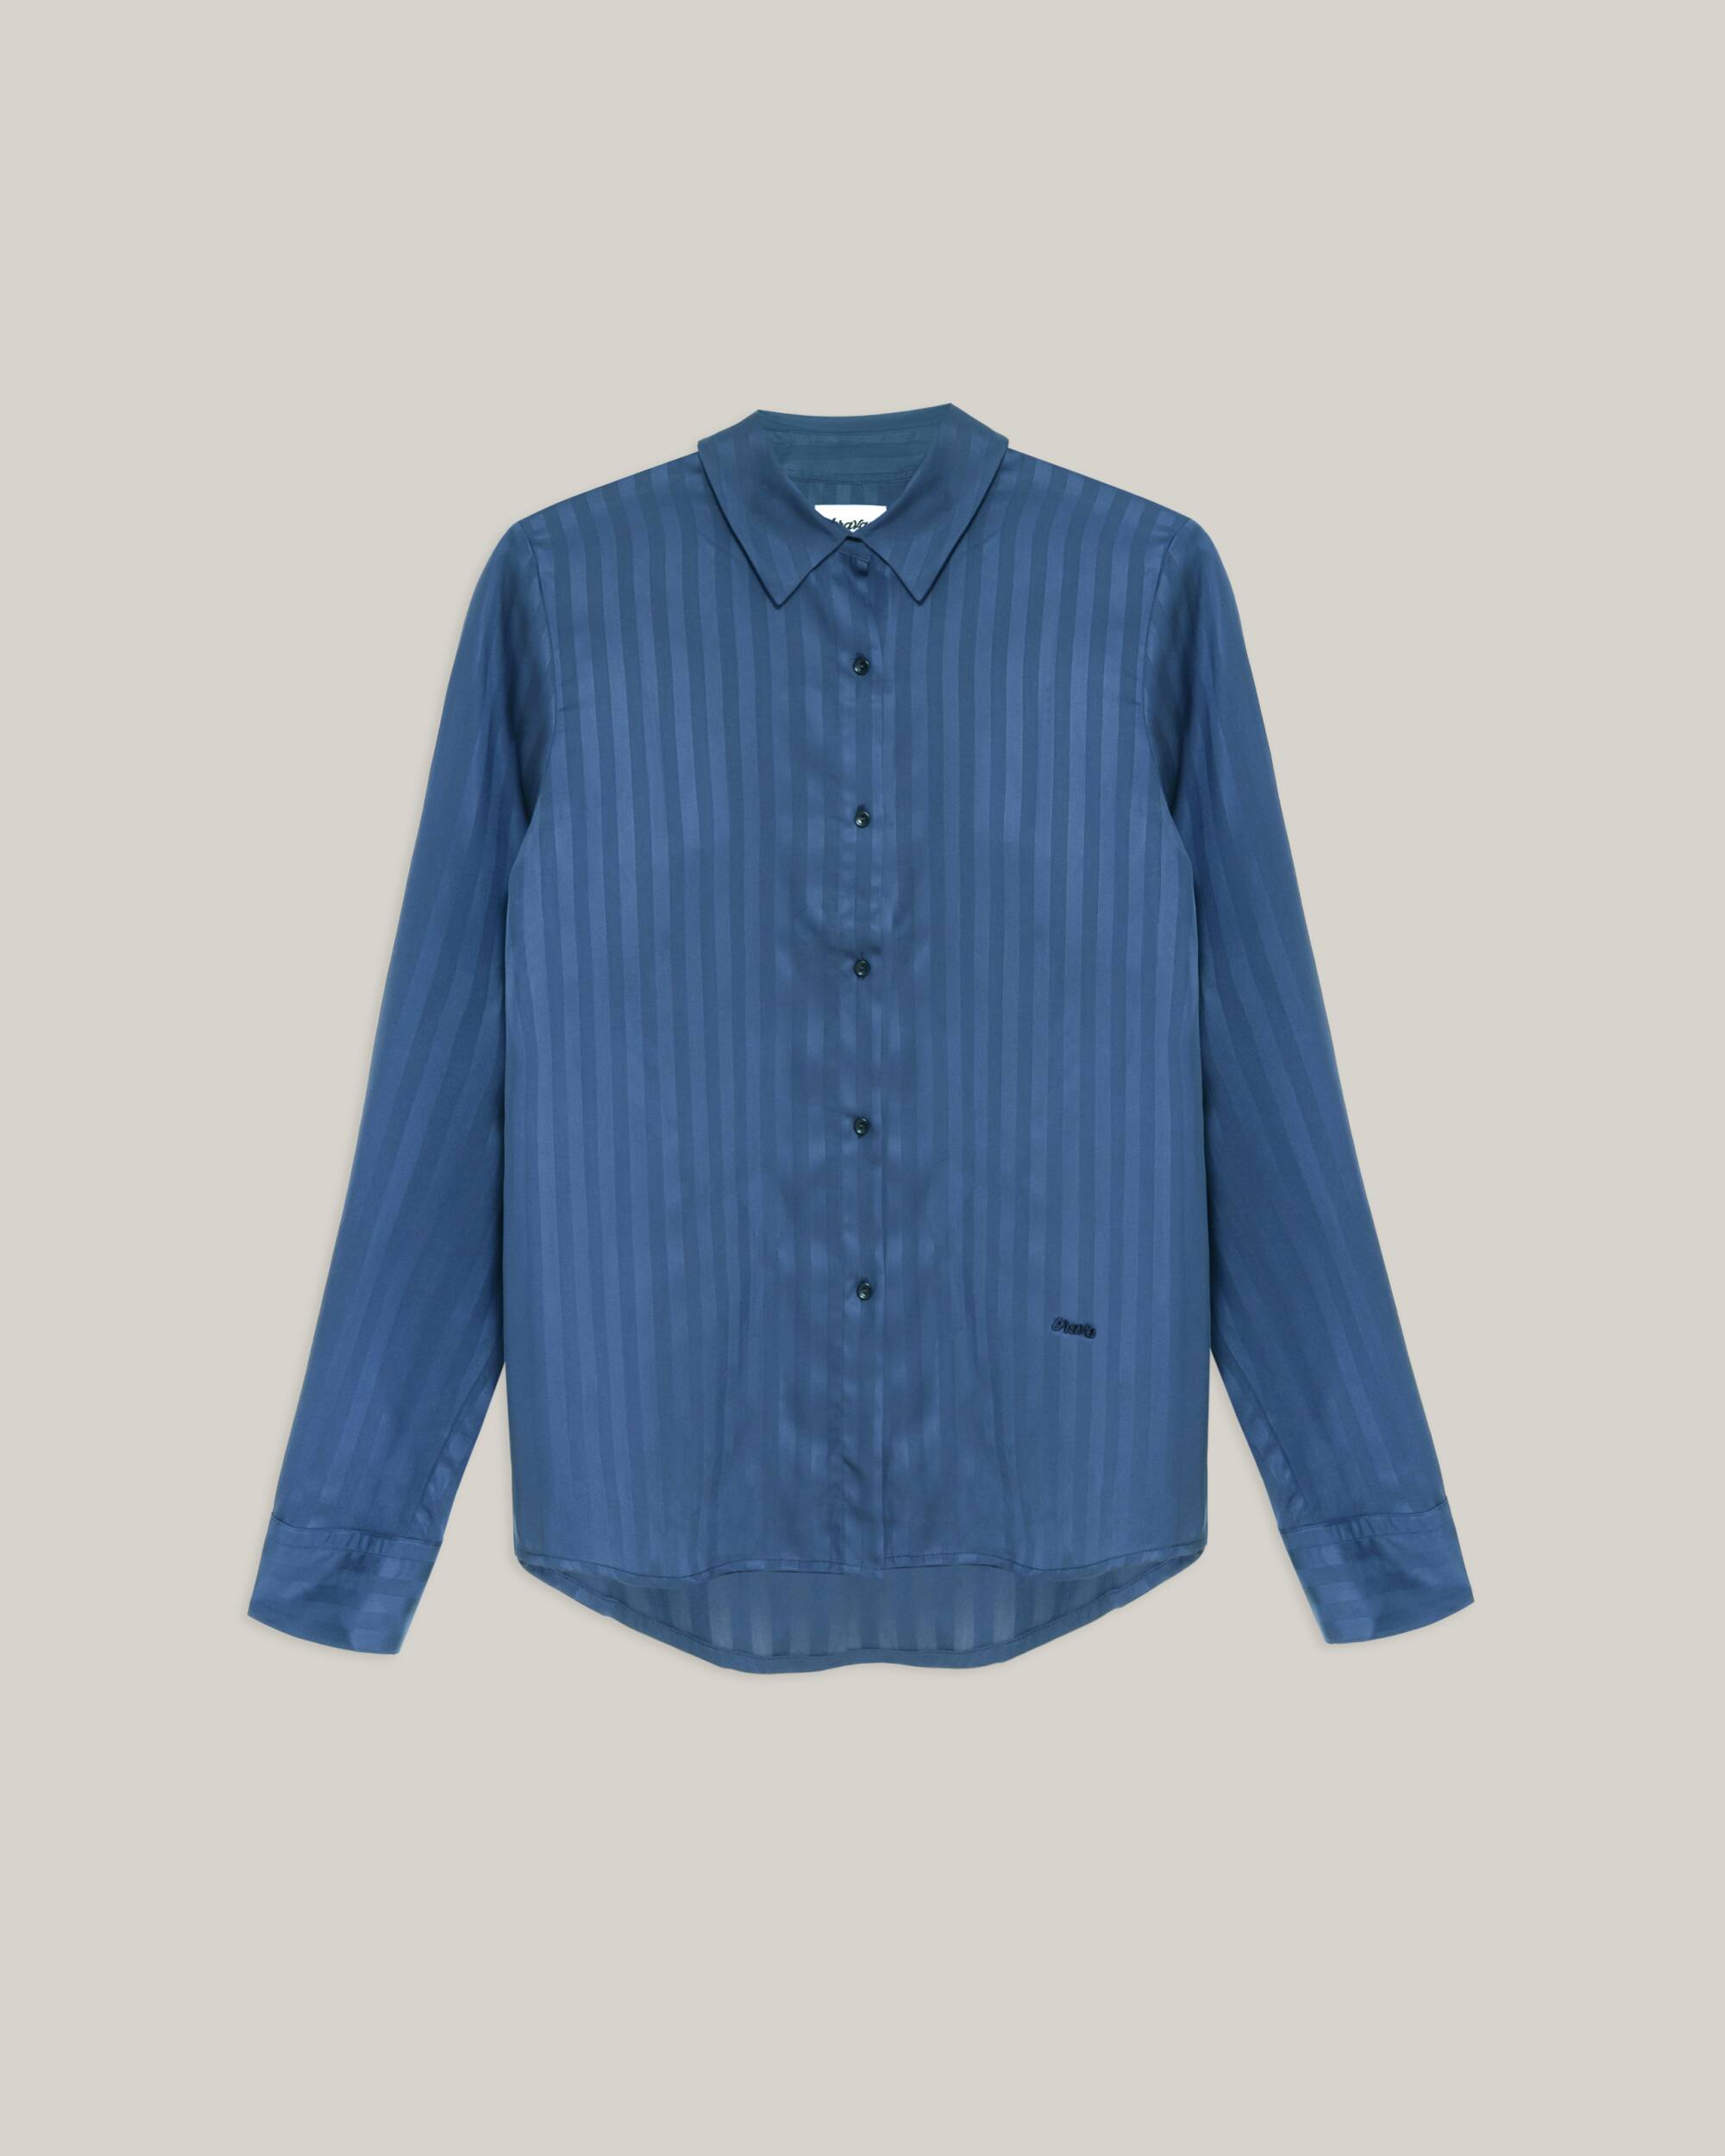 Blouse "Hidden Stripes" in navy - blue made of 100% Tencel® / Lyocell® from Brava Fabrics